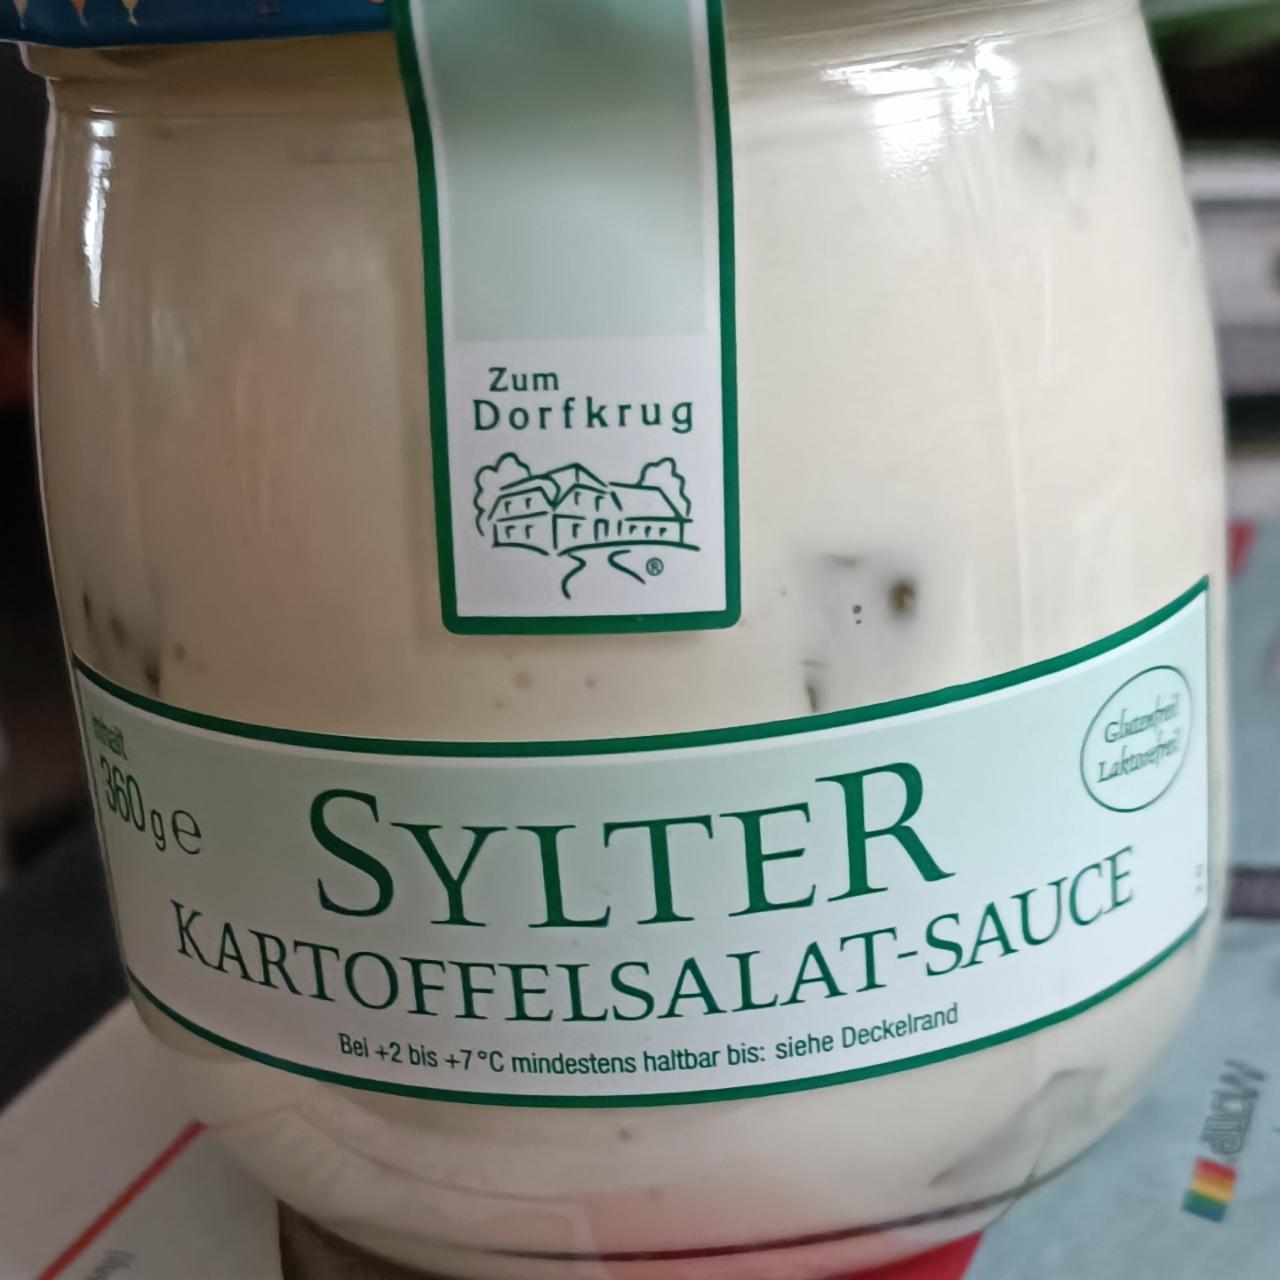 Fotografie - Sylter Kartoffelsalat-Sauce Zum Dorfkrug